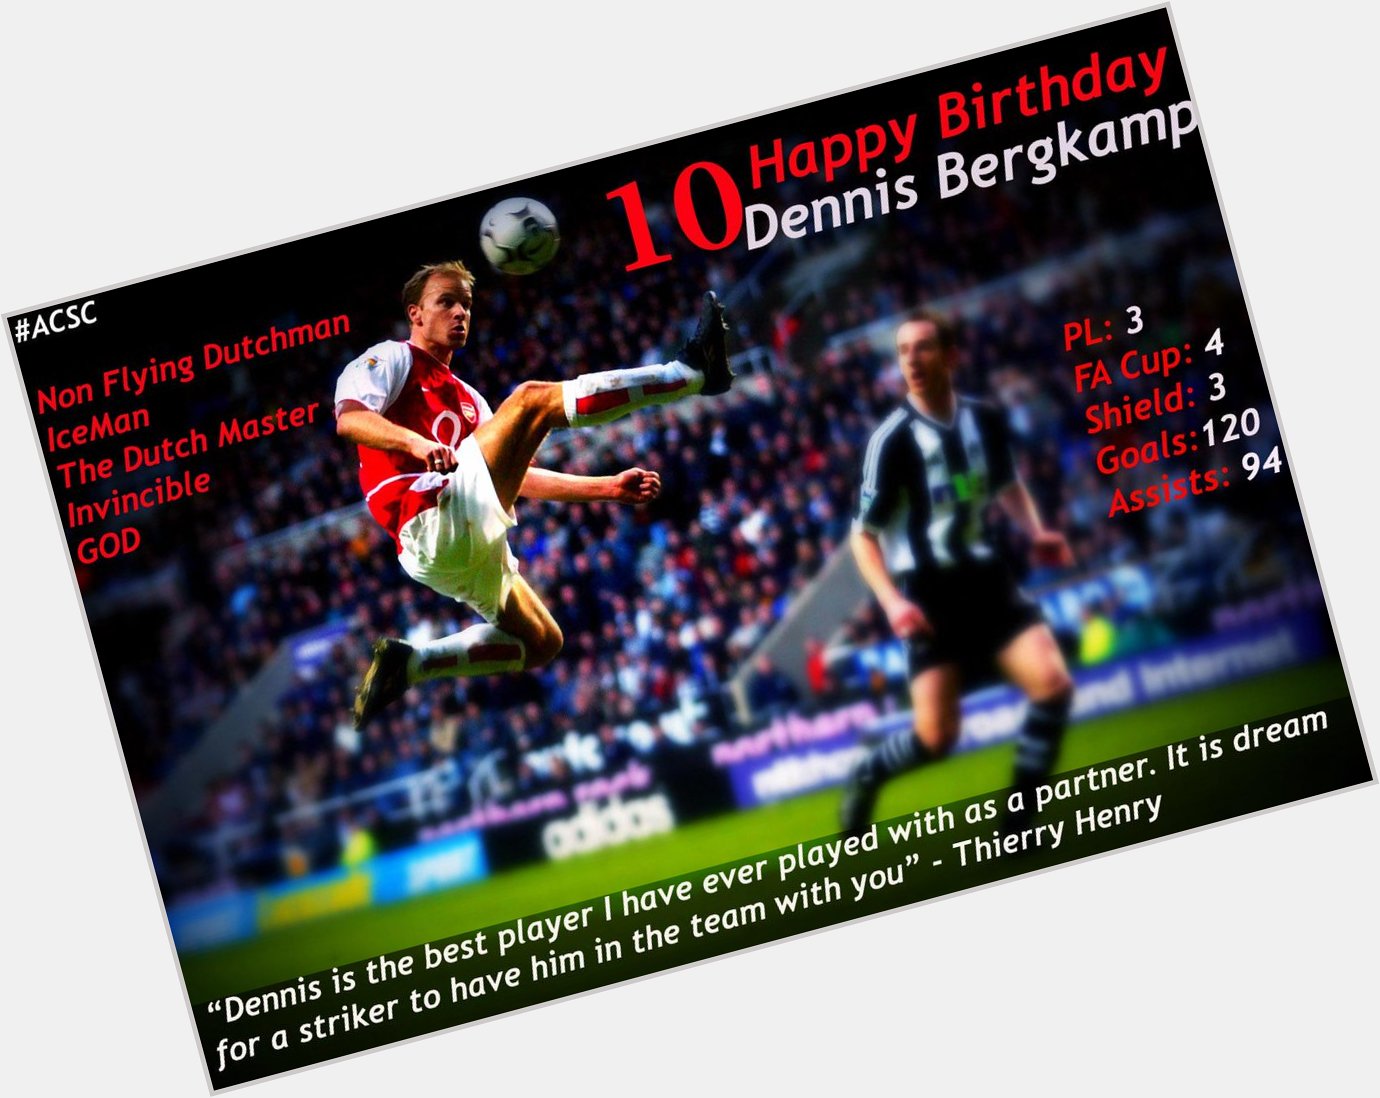 Happy birthday - Dennis Bergkamp, our GOD. 